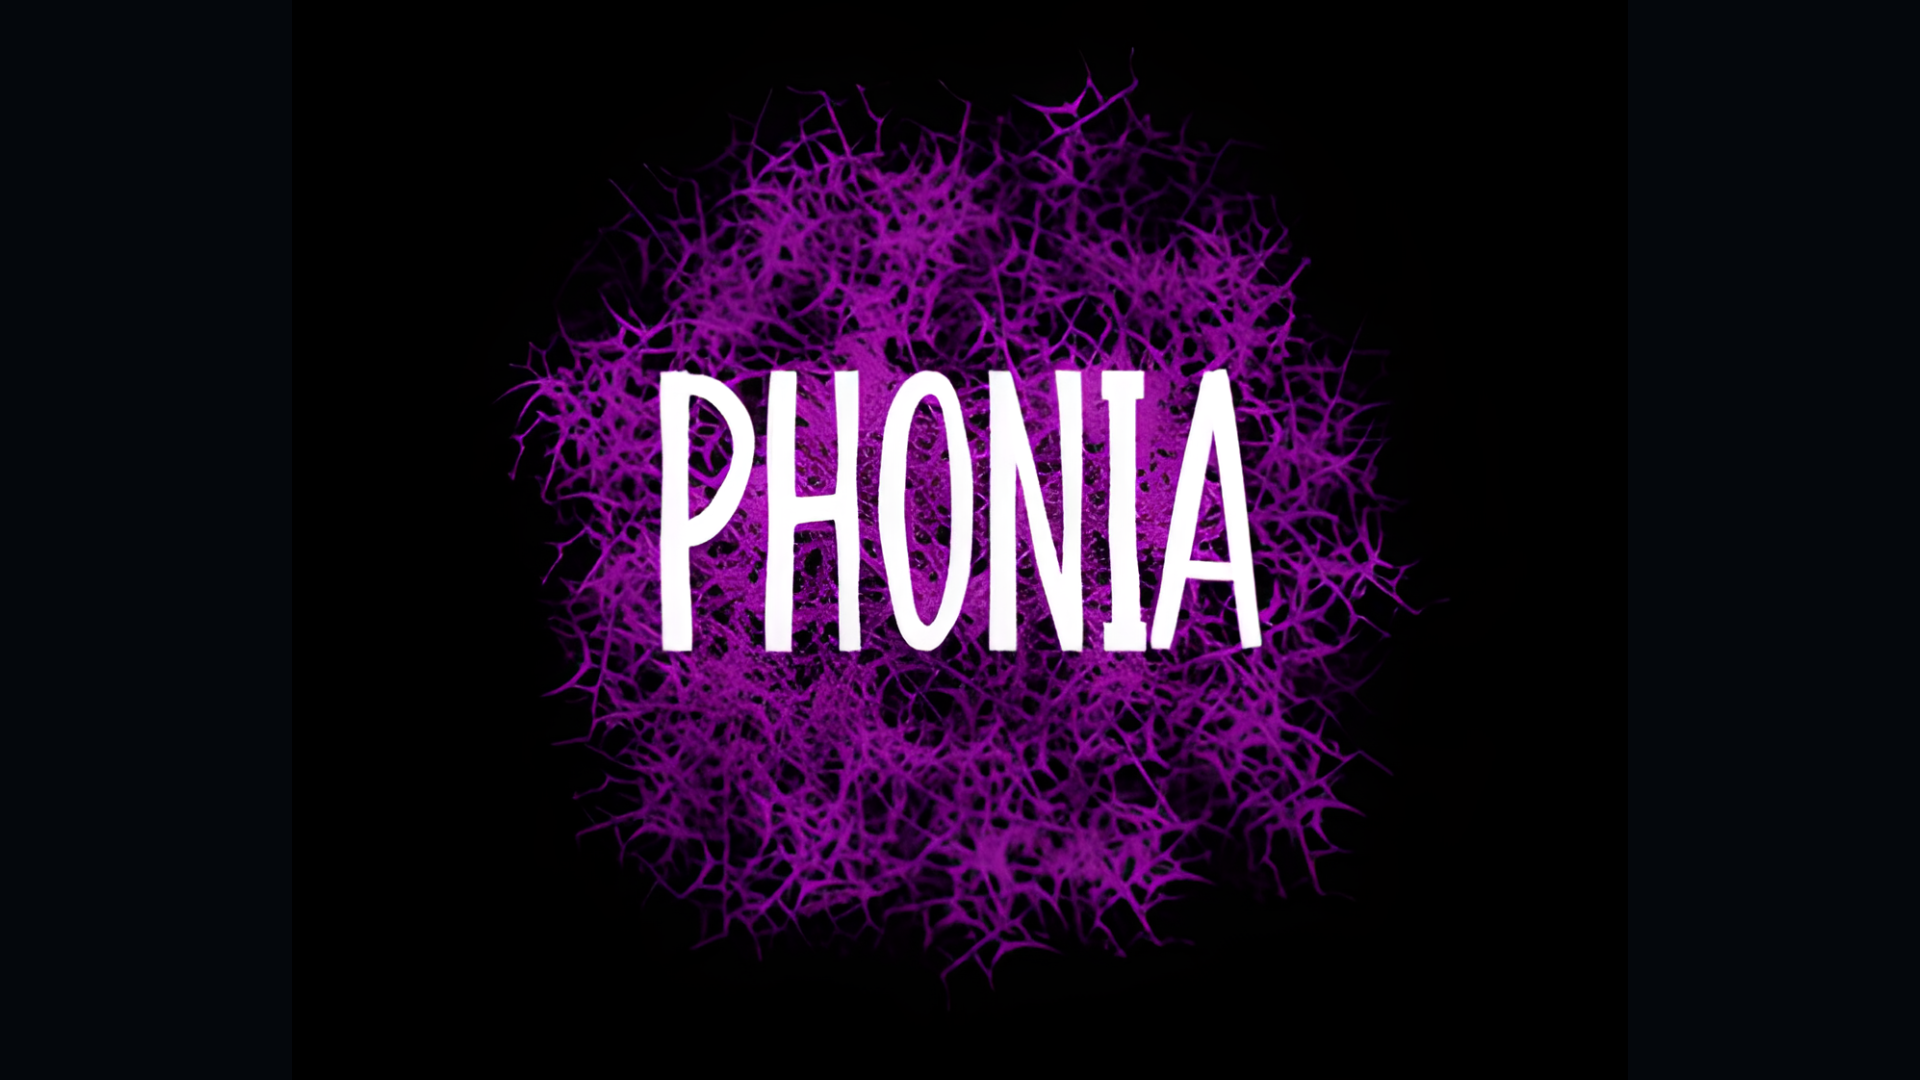 Phonia Game